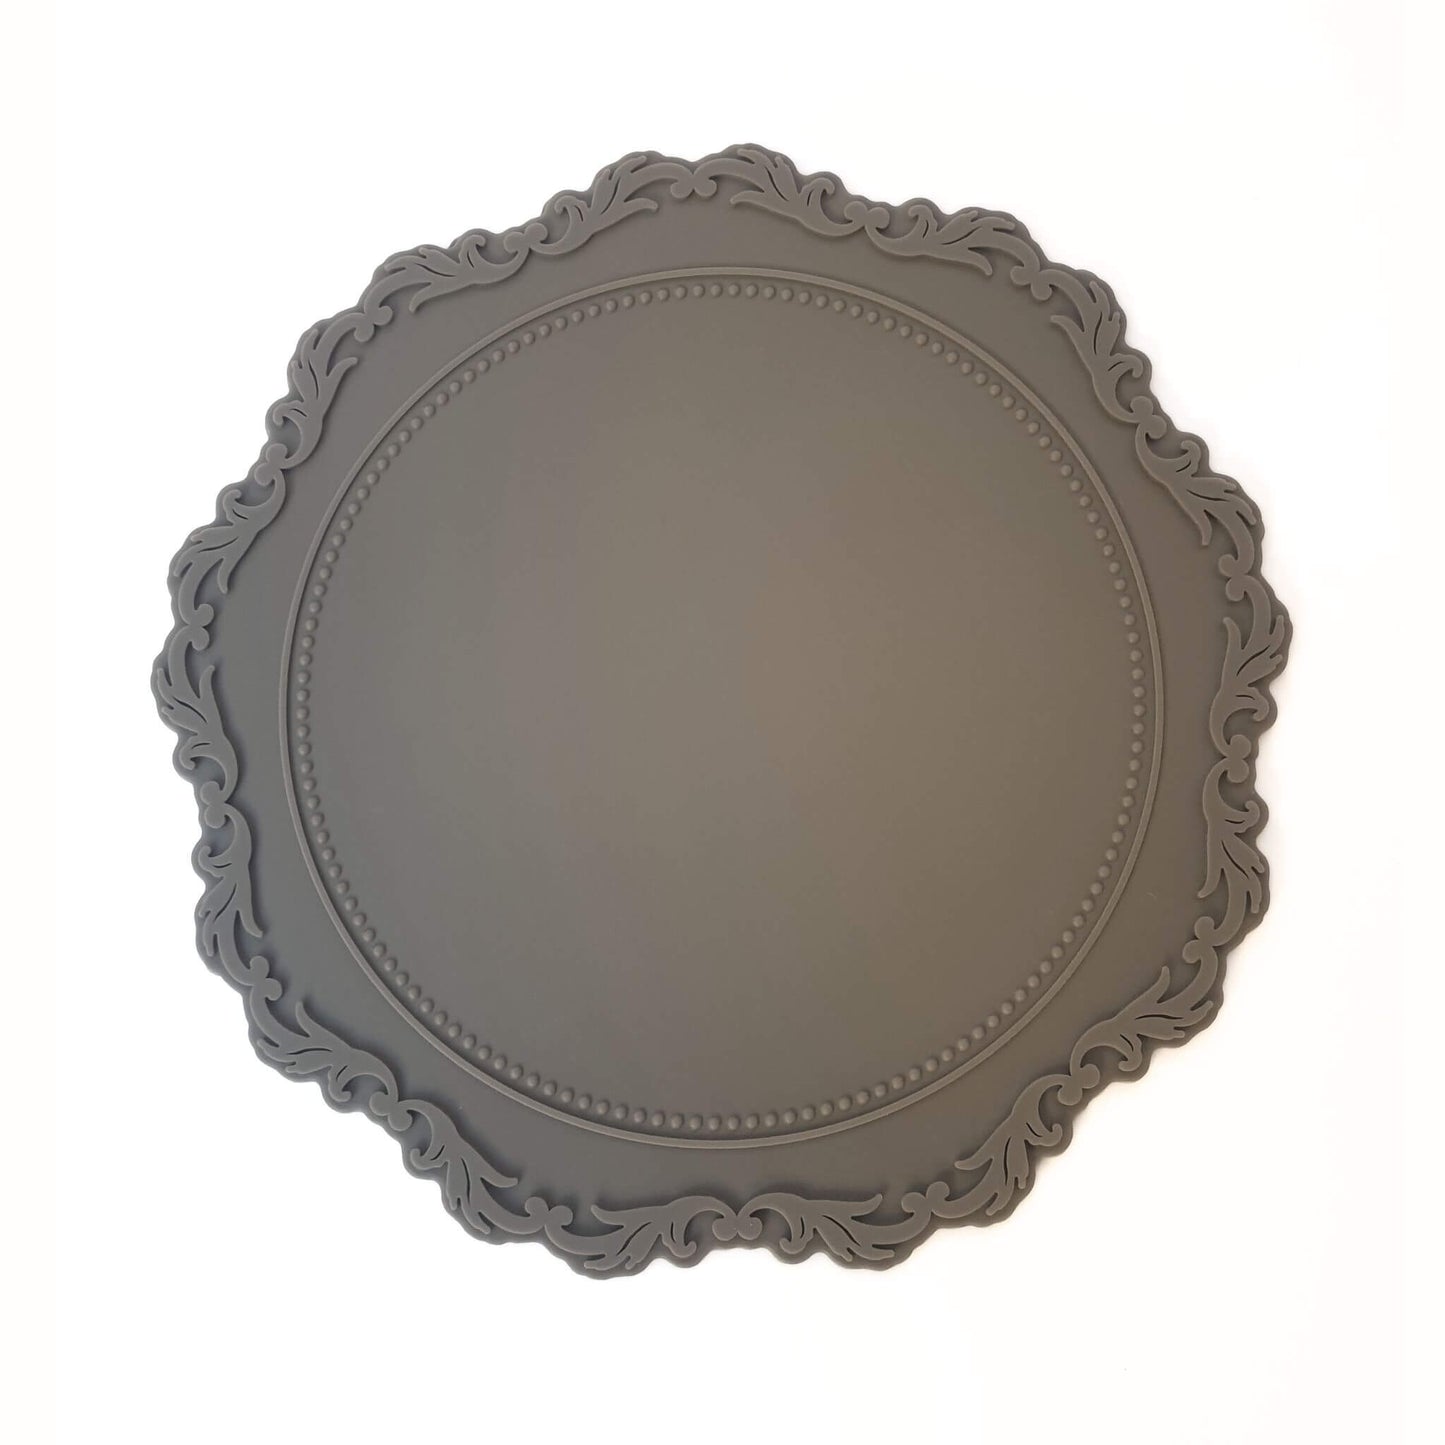 Charcoal grey round wax sealing mat with filigree  border detail